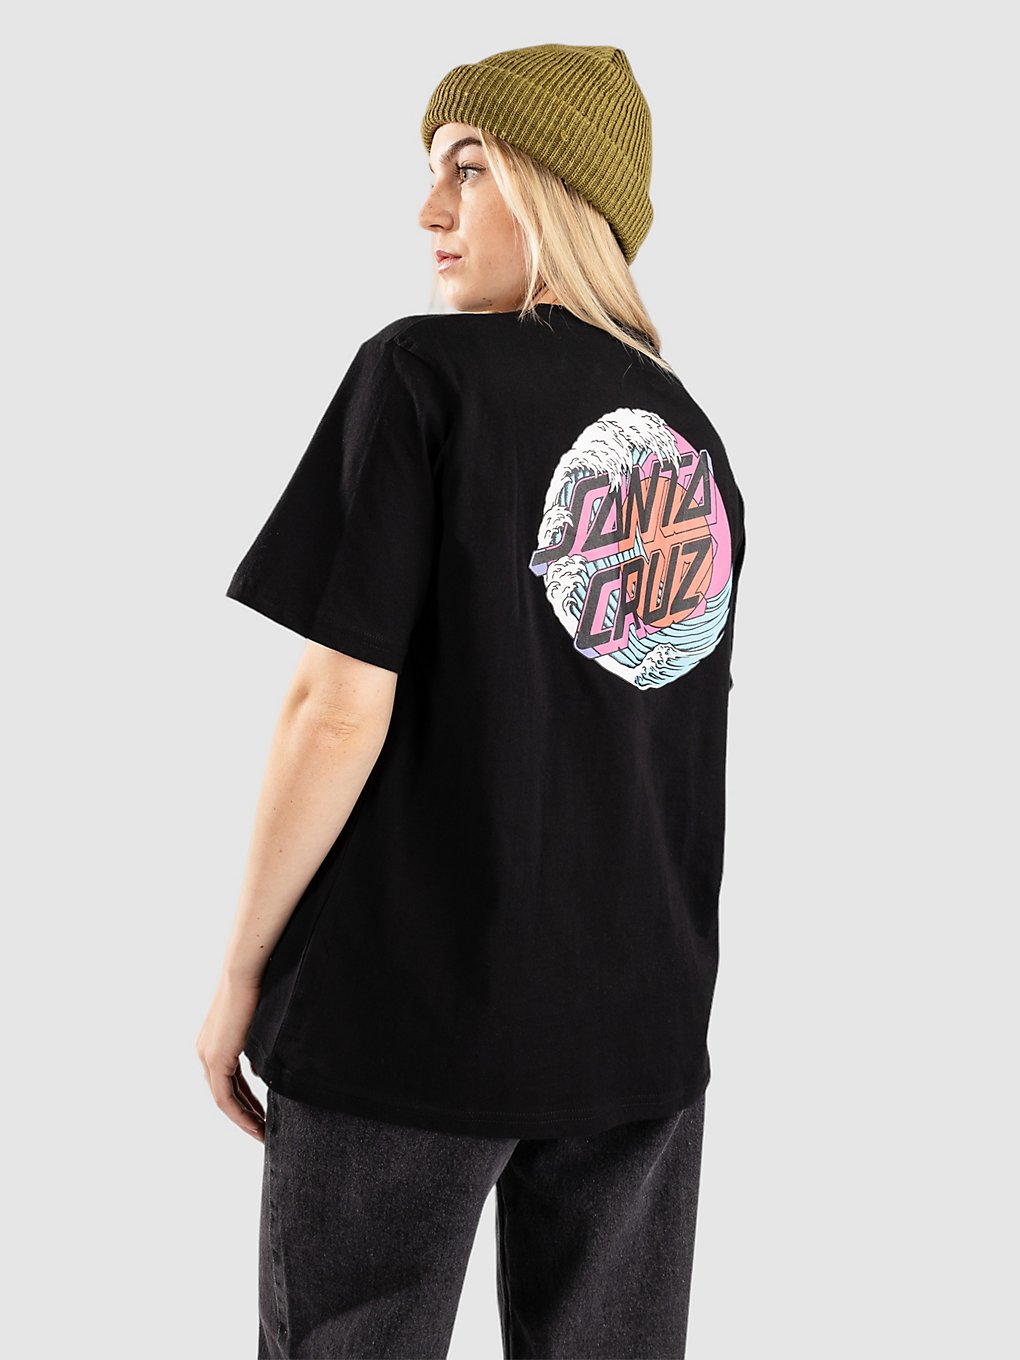 Santa Cruz Tsunami Dot T-Shirt black kaufen